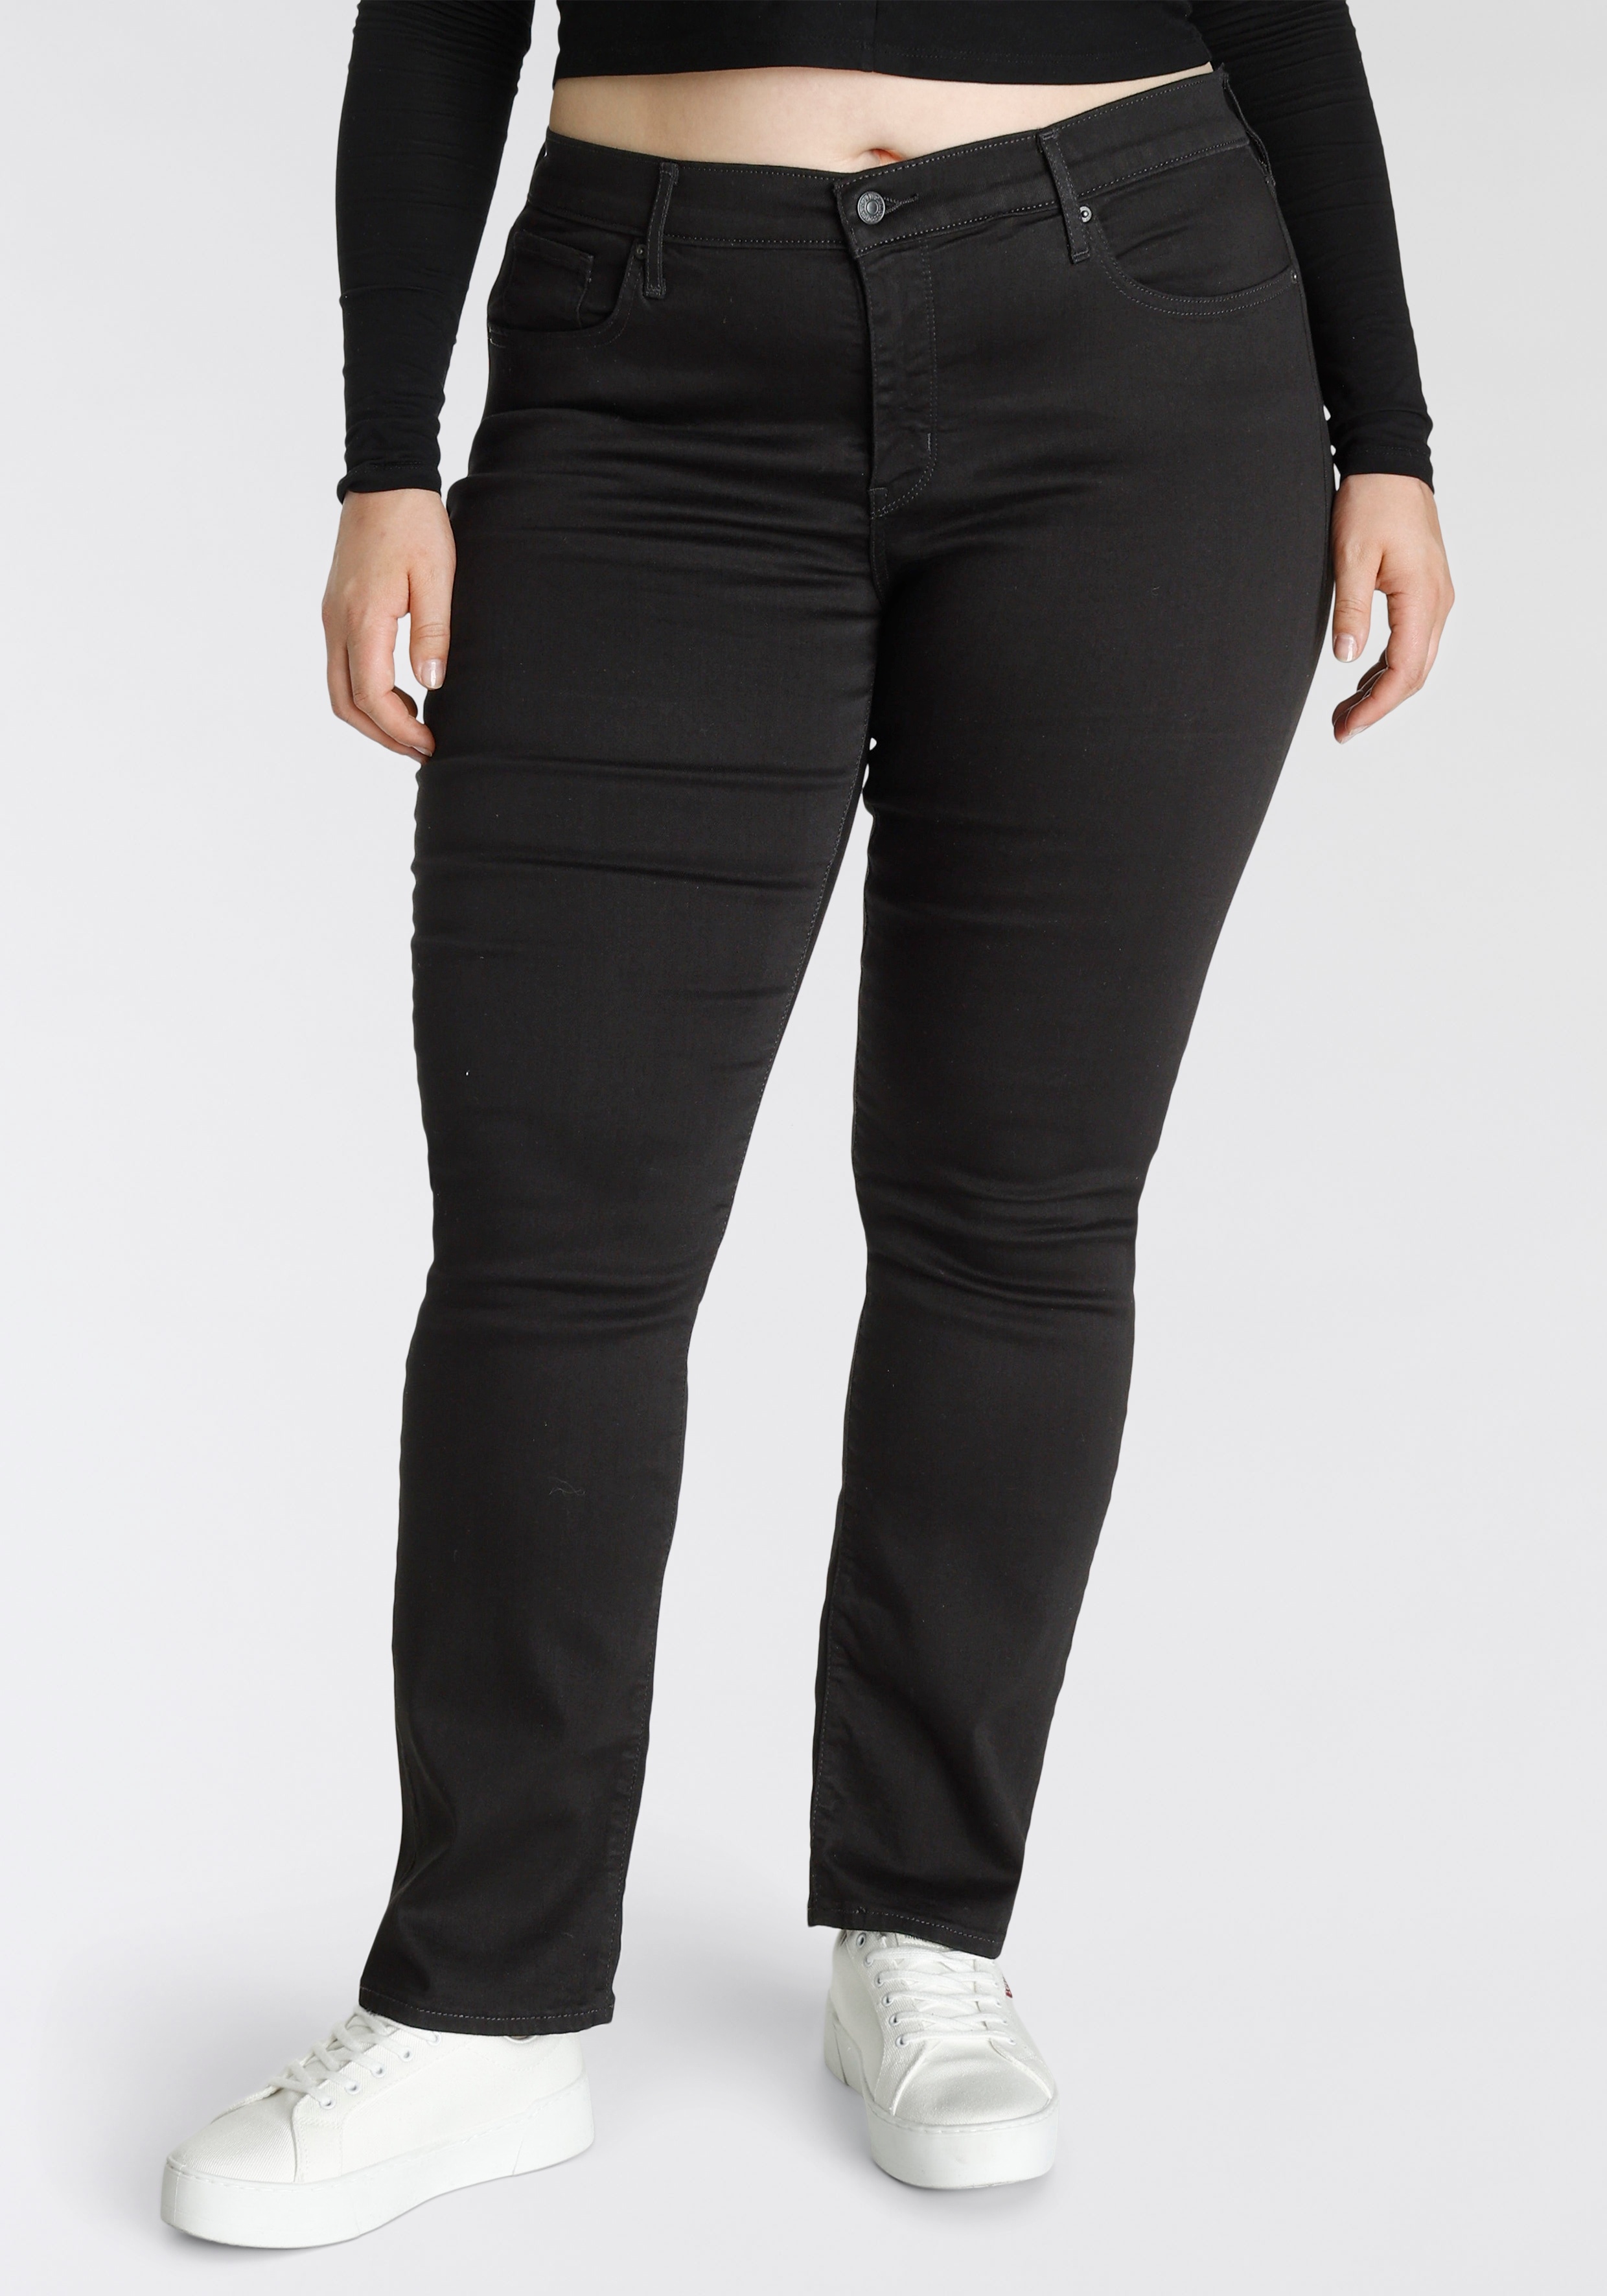 Straight-Jeans LEVI'S PLUS "314 Shaping Straight" Gr. 22 (52), Länge 30, schwarz (black) Damen Jeans Gerade